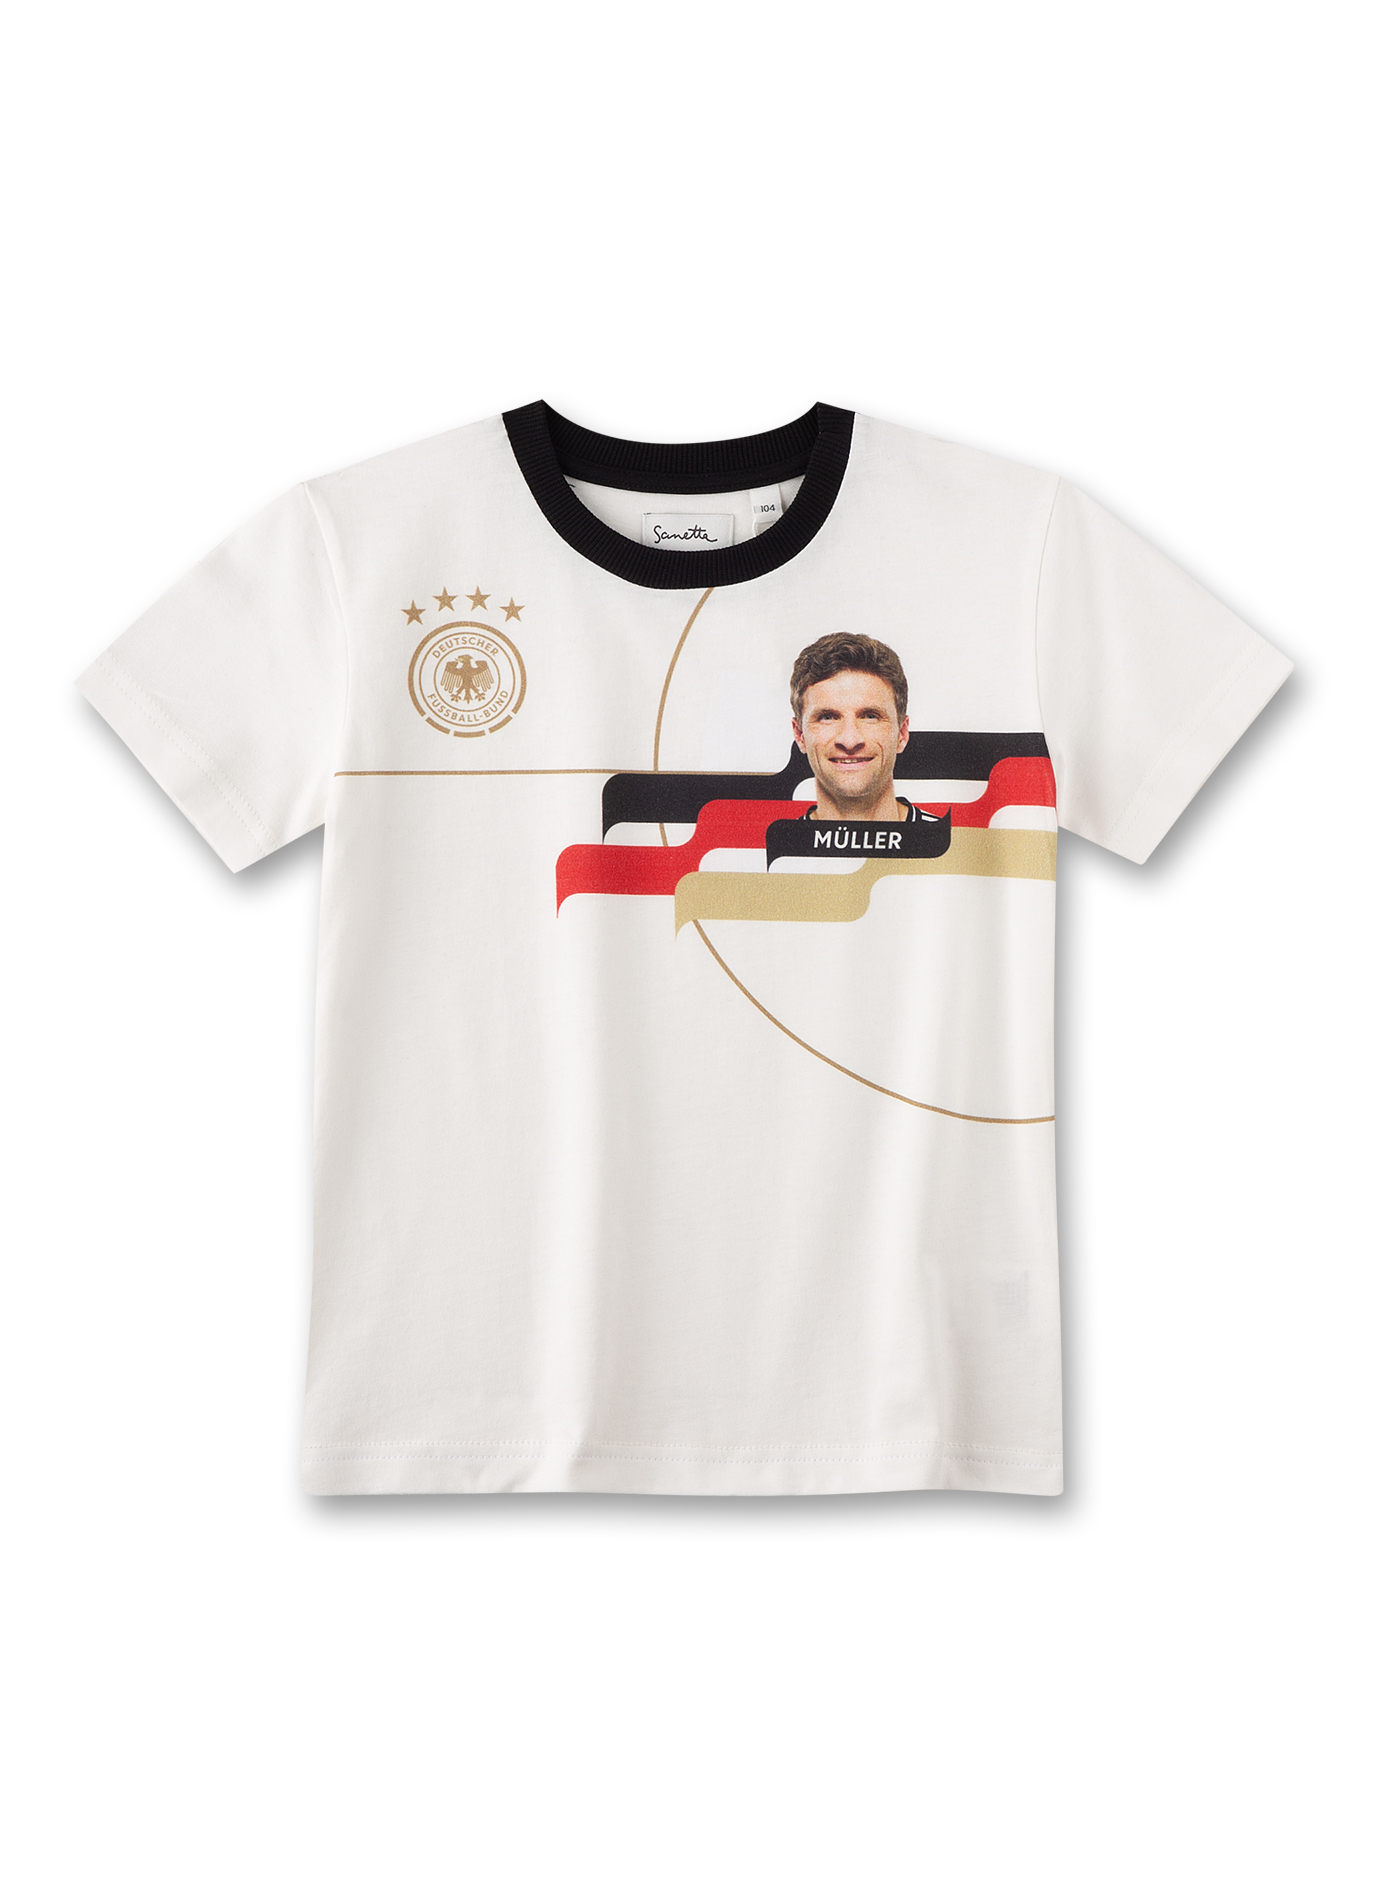 DFB-Fanshirt Müller Off-White